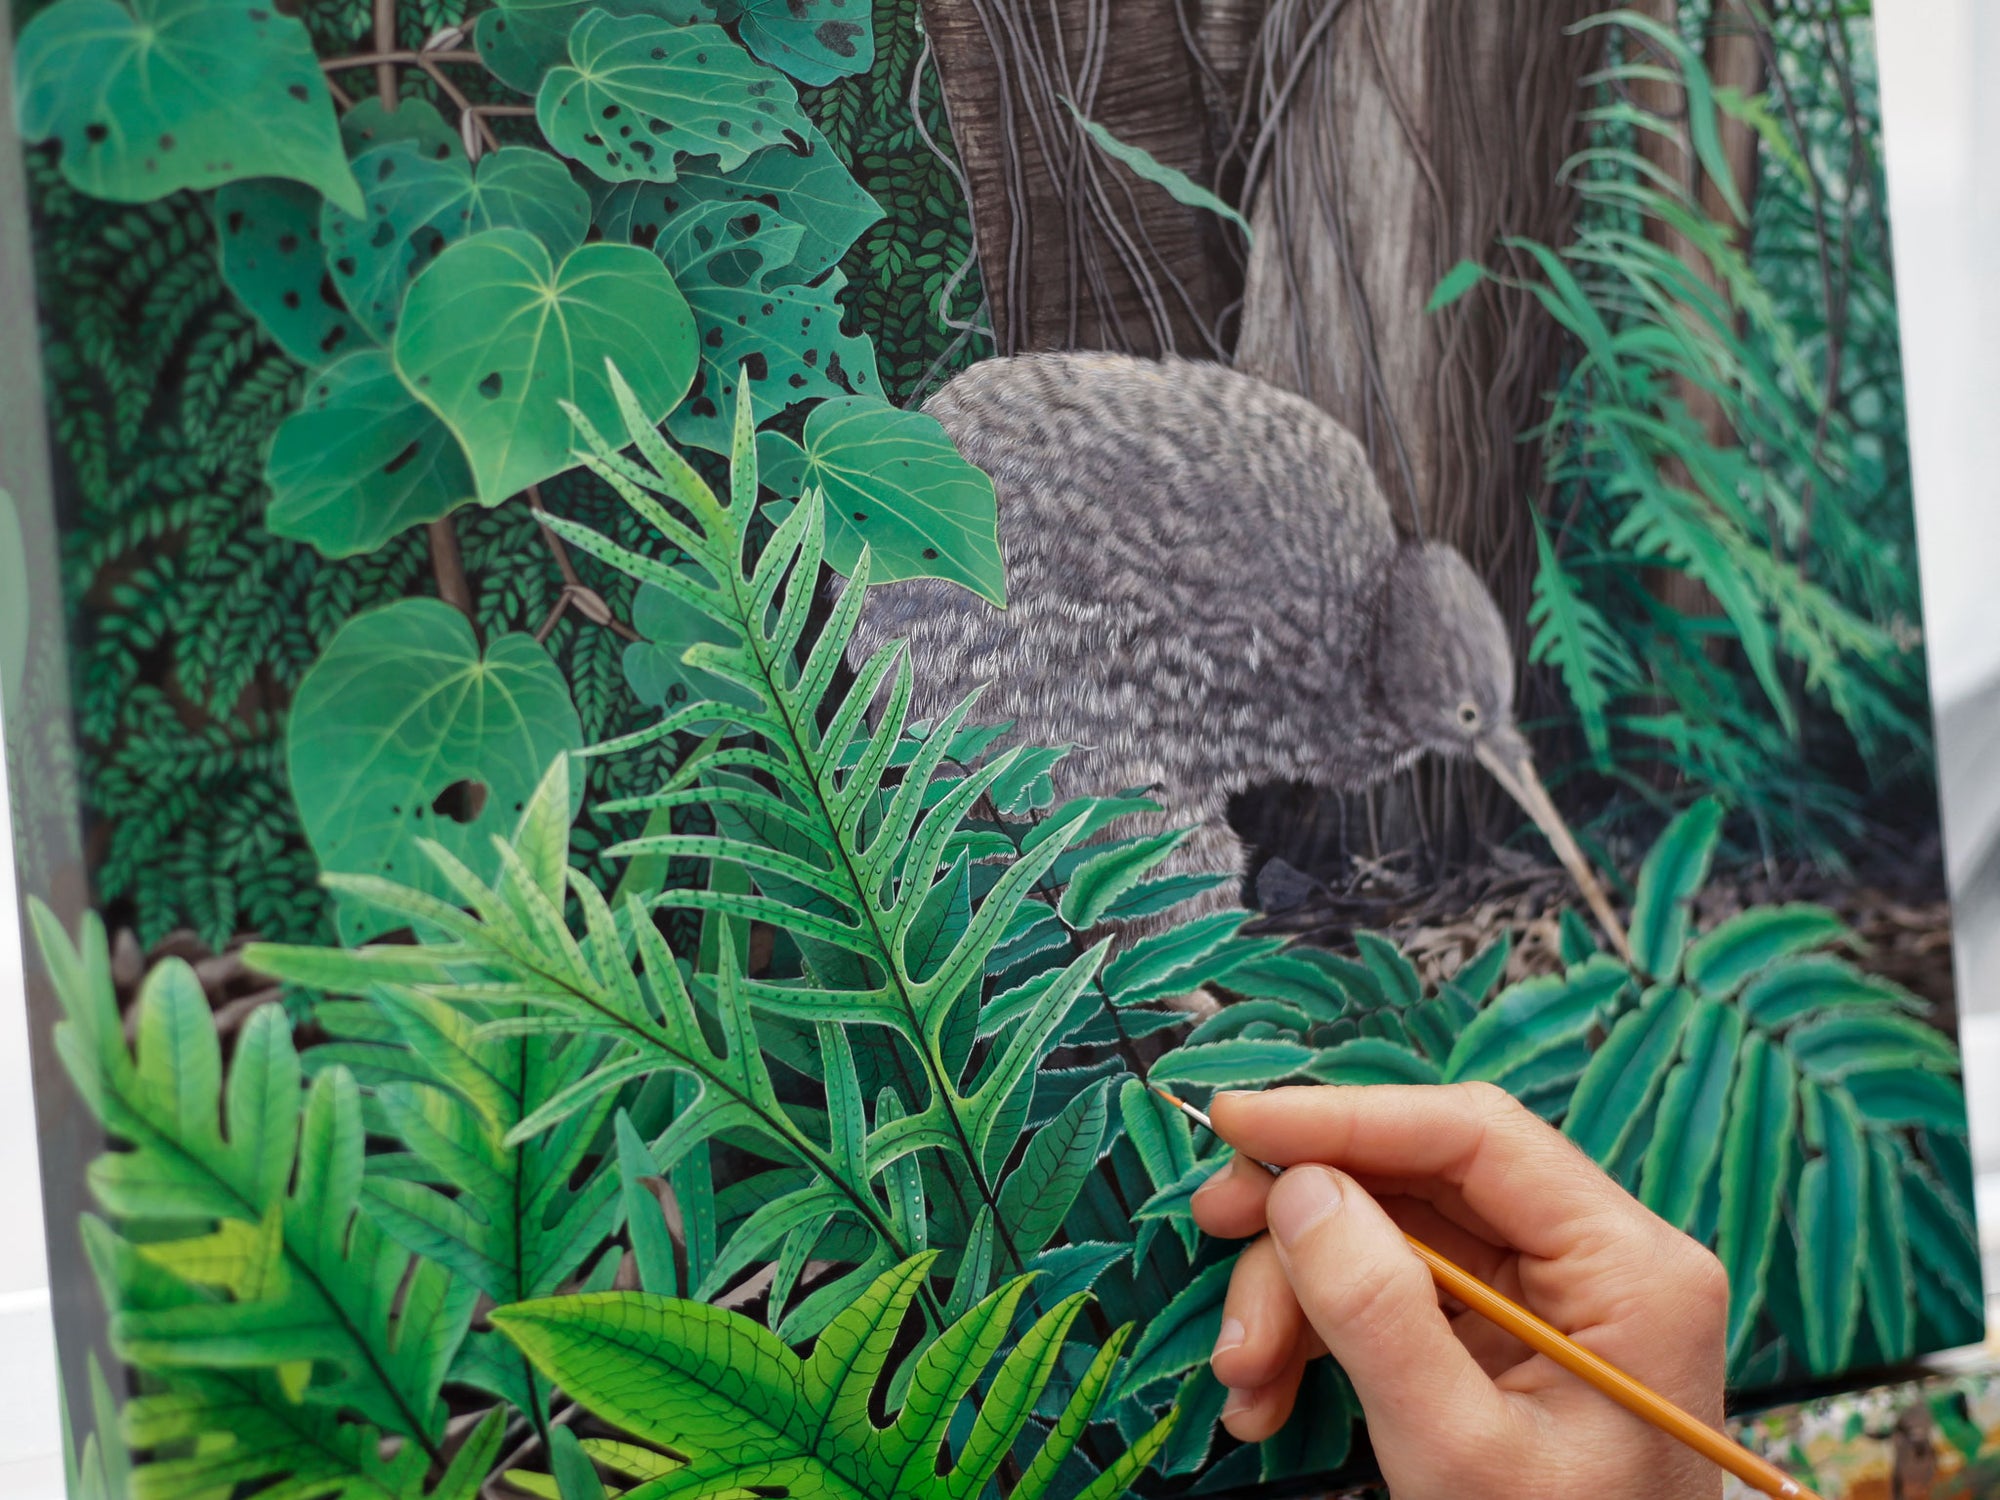 Little Spotted Kiwi/Kiwi Pukupuku [Untitled] progress